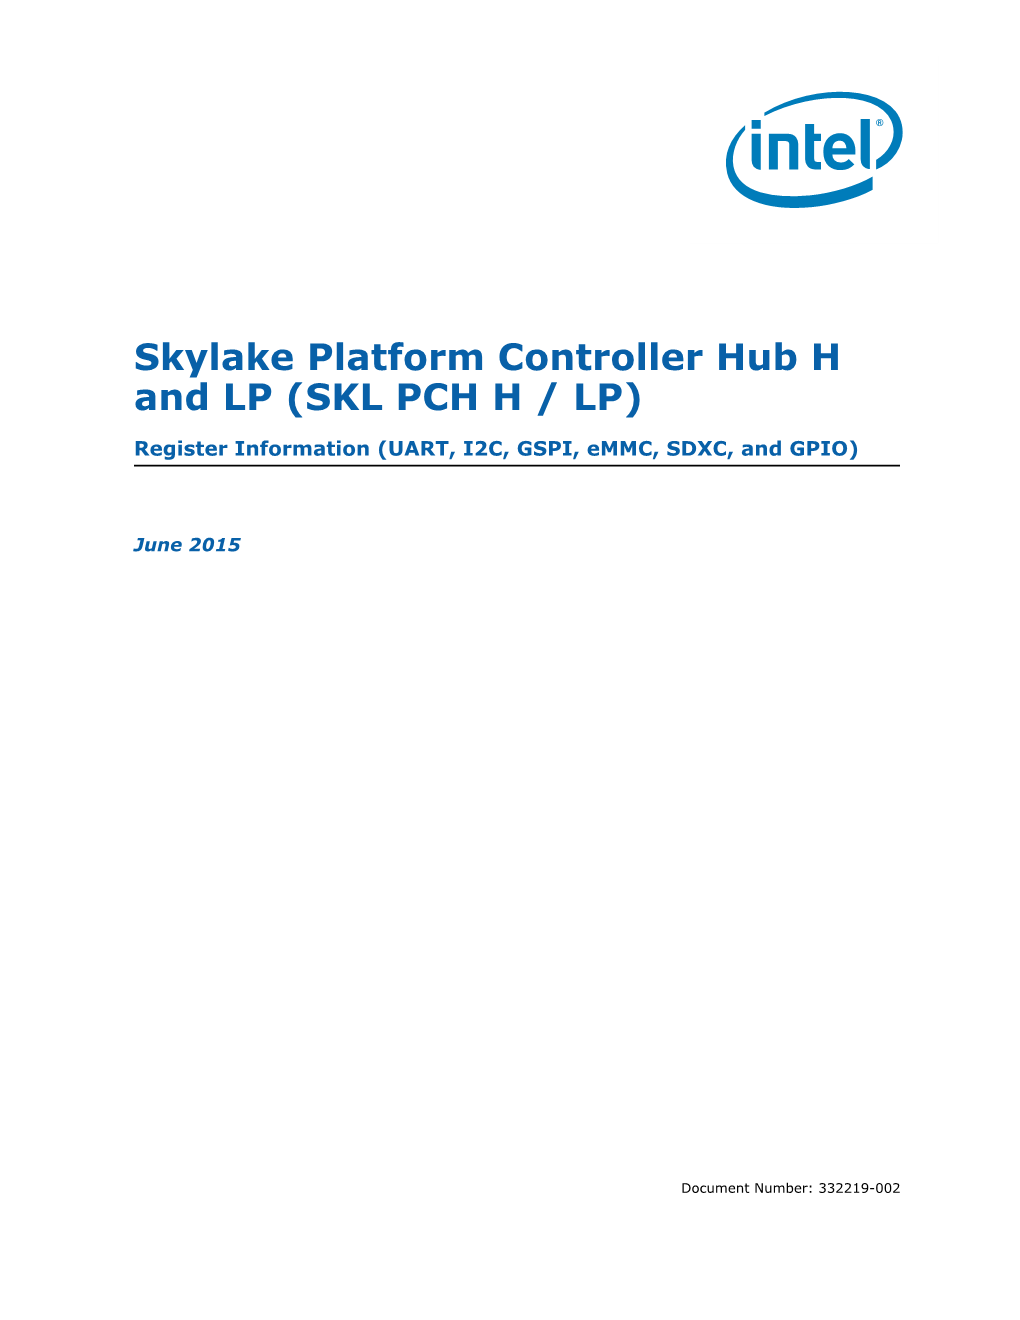 Skylake Platform Controller Hub H and LP (SKL PCH H / LP)